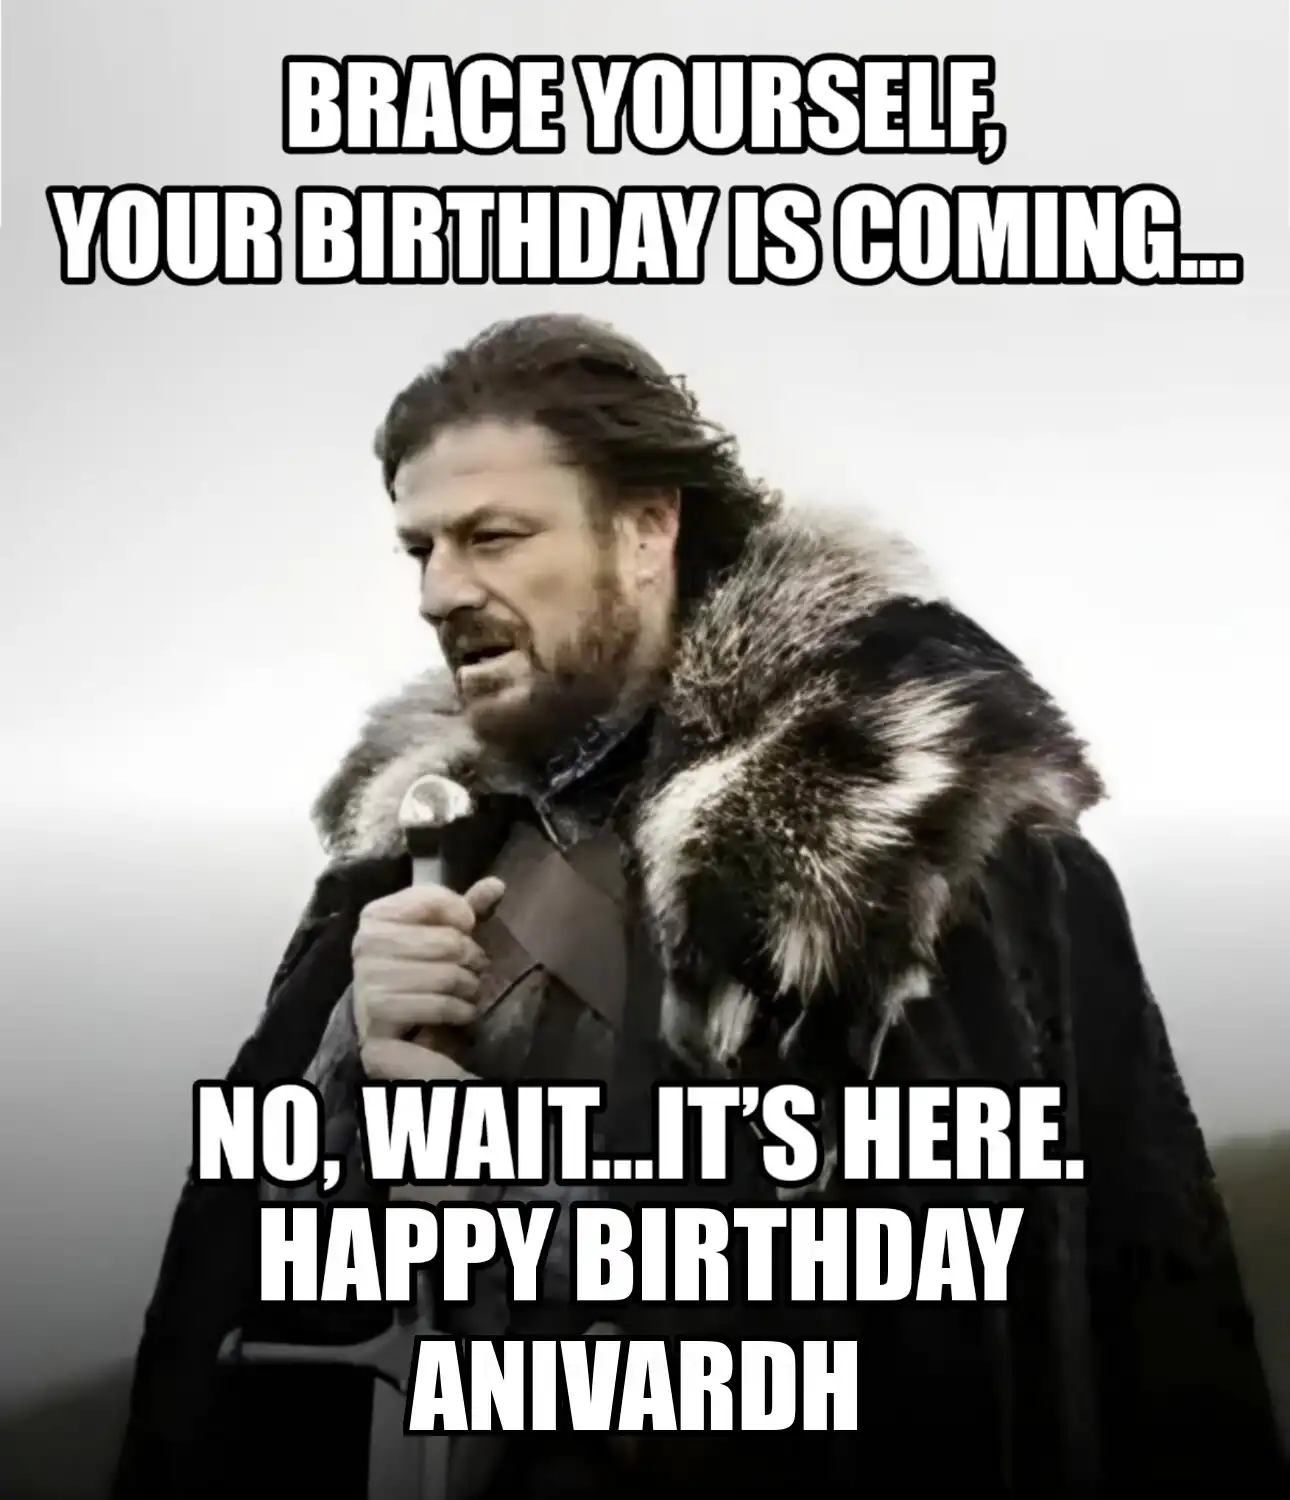 Happy Birthday Anivardh Brace Yourself Your Birthday Is Coming Meme